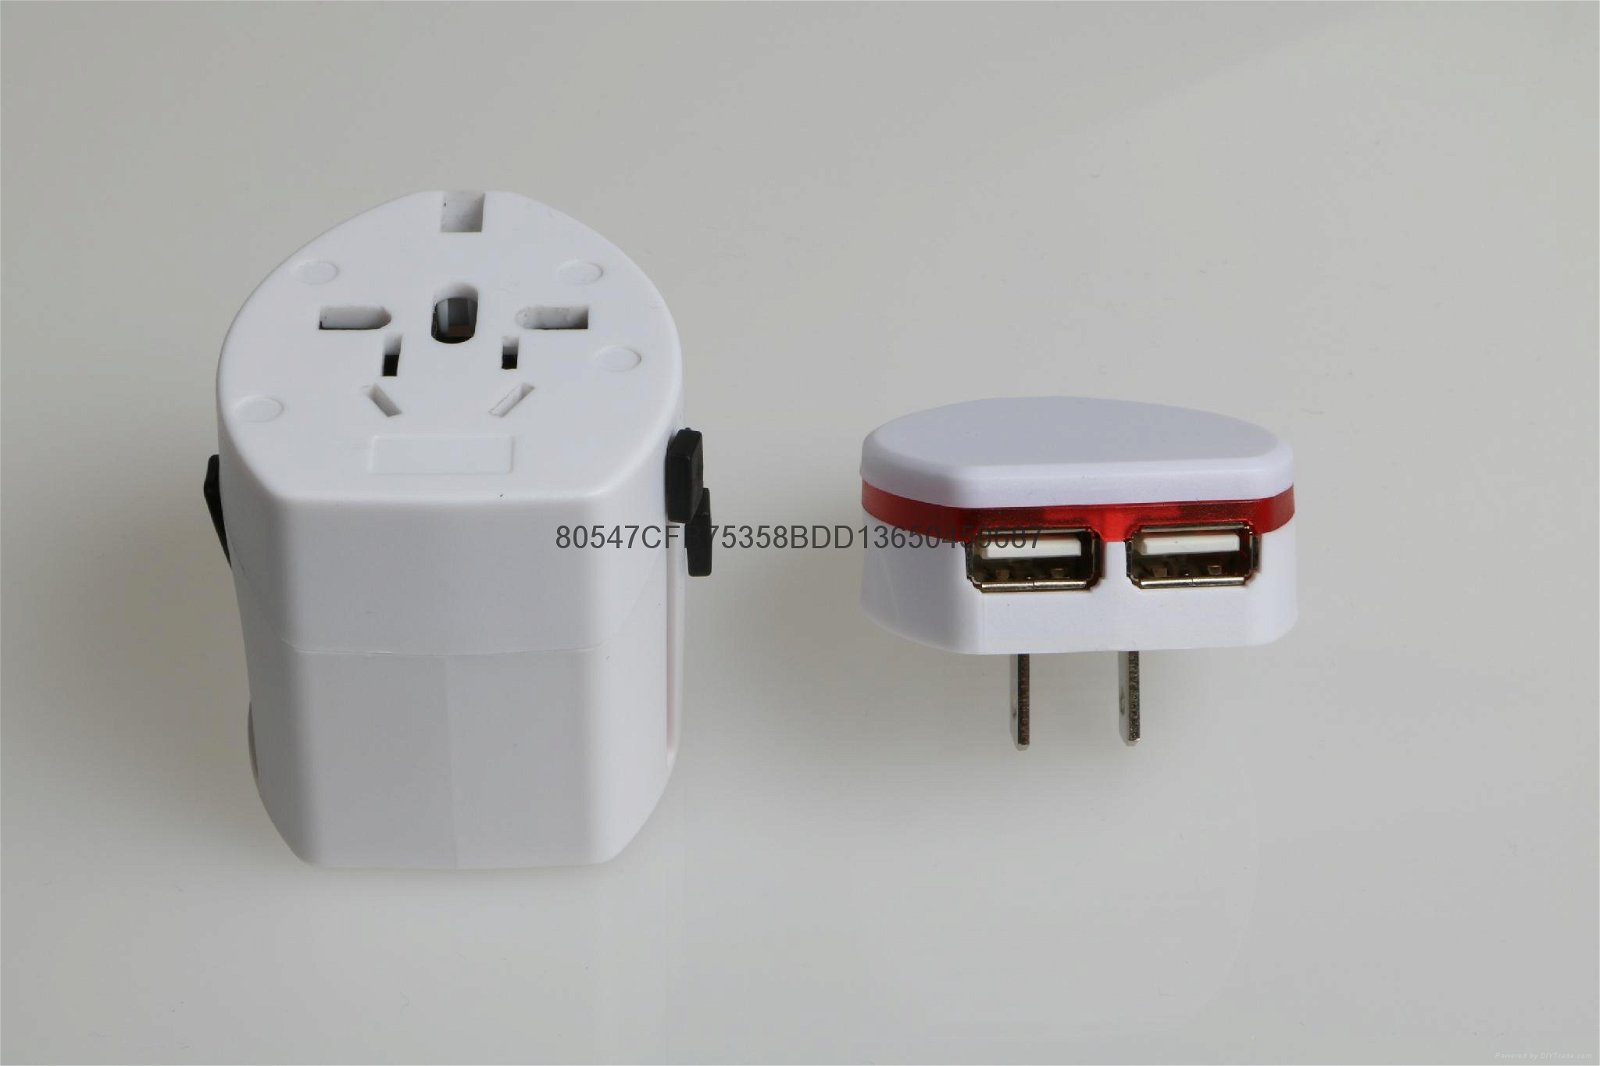 SWA2U 双USB转换插座 全球通用转换插座 万能转换器 4